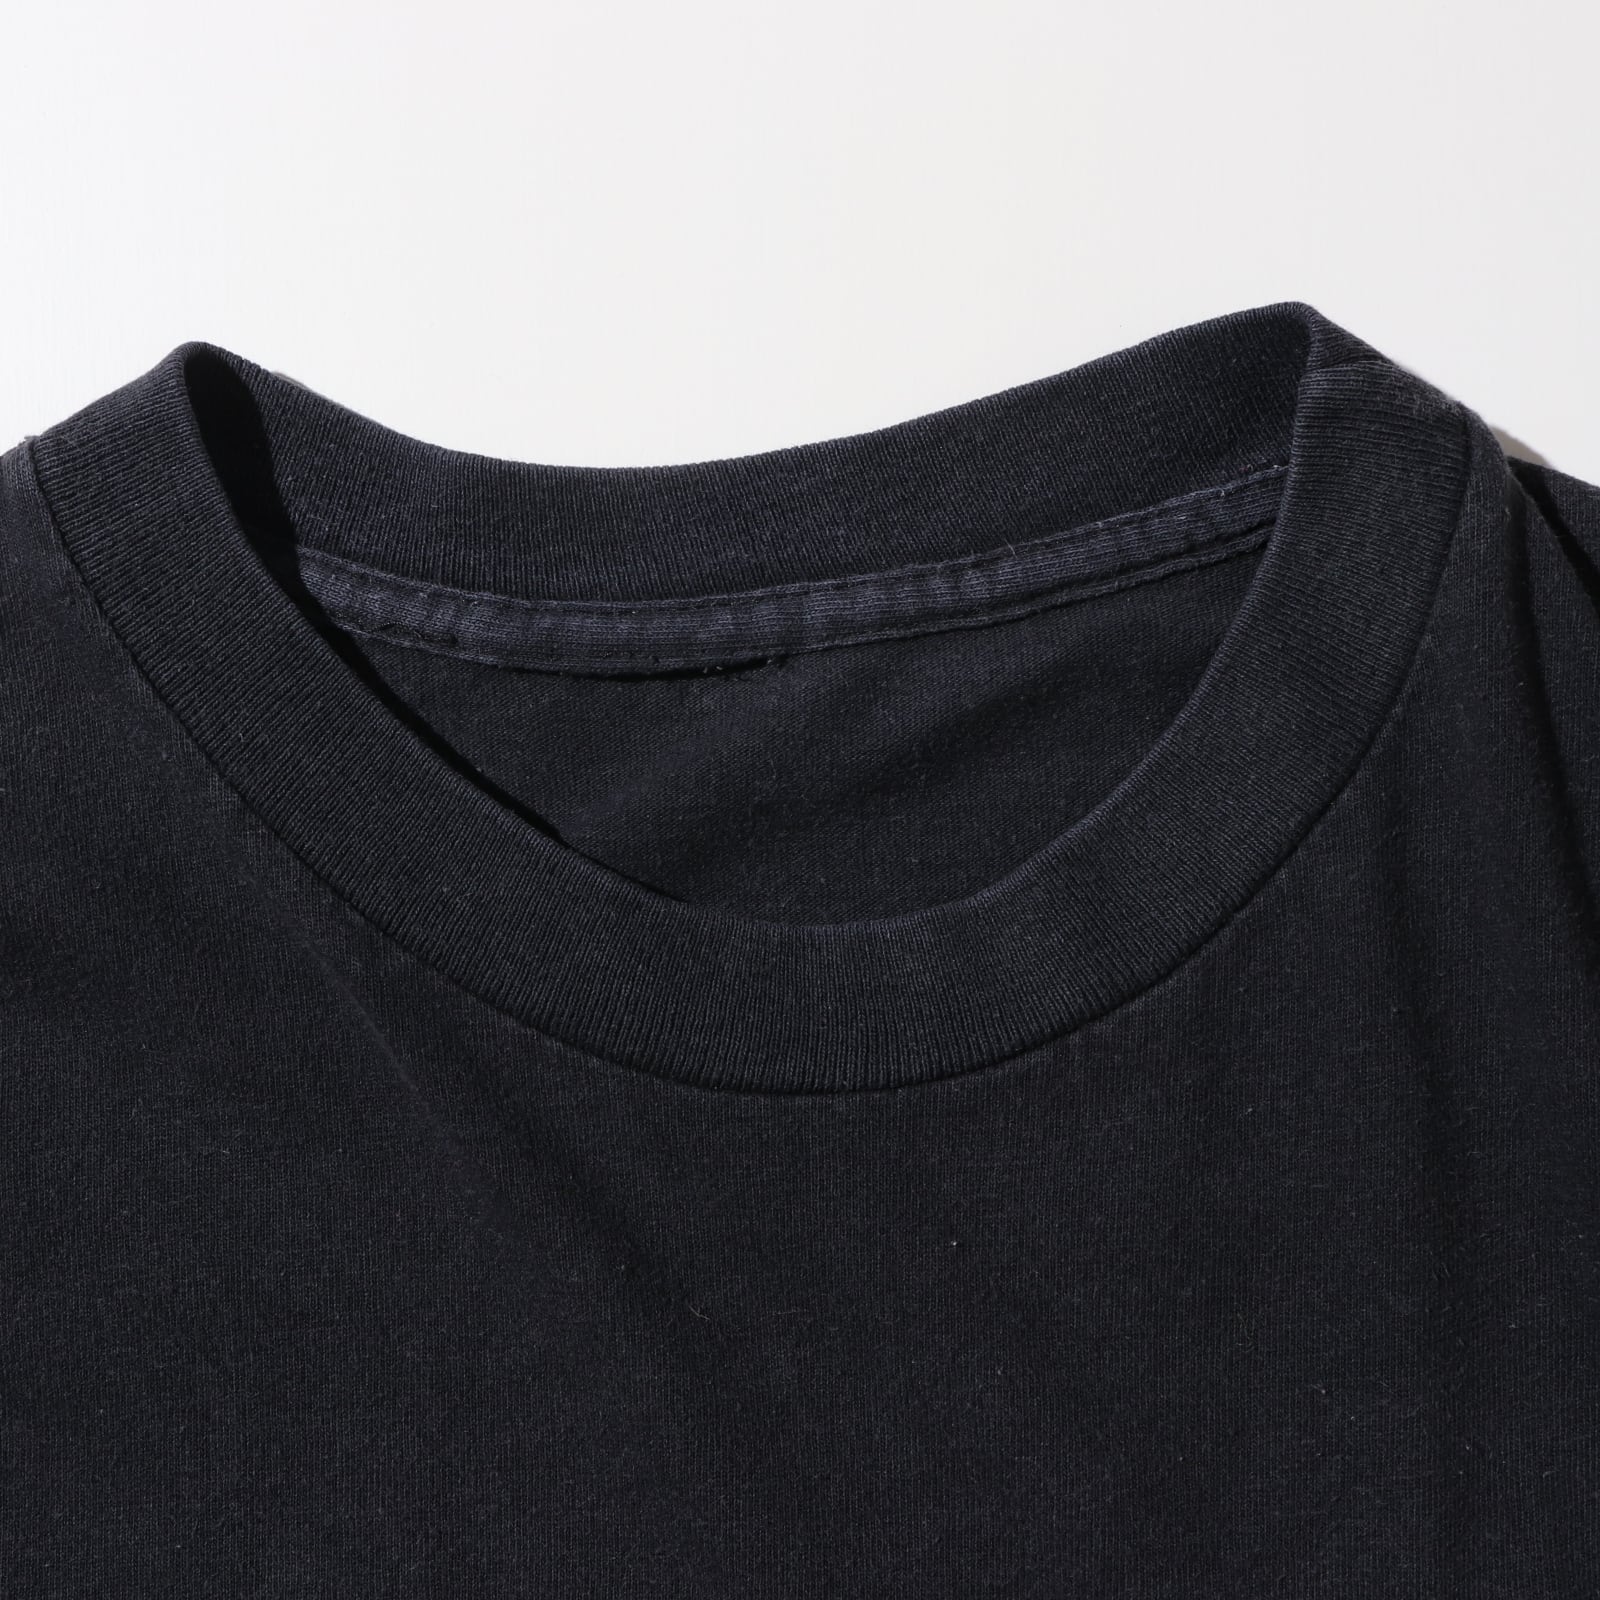 Marlboro XL リザード Tシャツ トカゲ マルボロ マールボロ 黒 | ENCOUNT